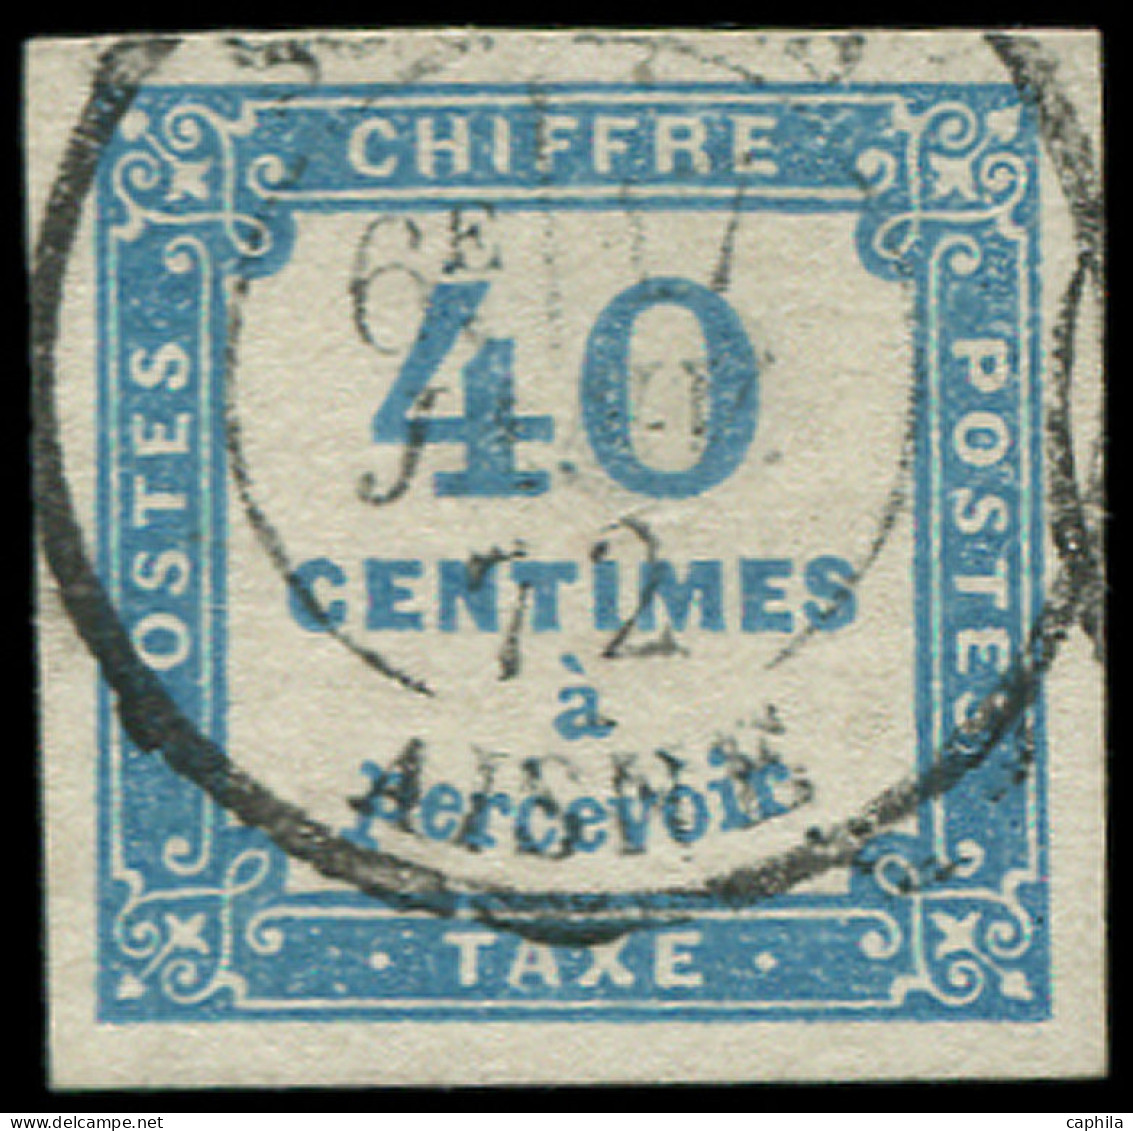 O FRANCE - Taxe - 7, Signé Calves, Belles Marges: 40c. Bleu - 1859-1959 Oblitérés